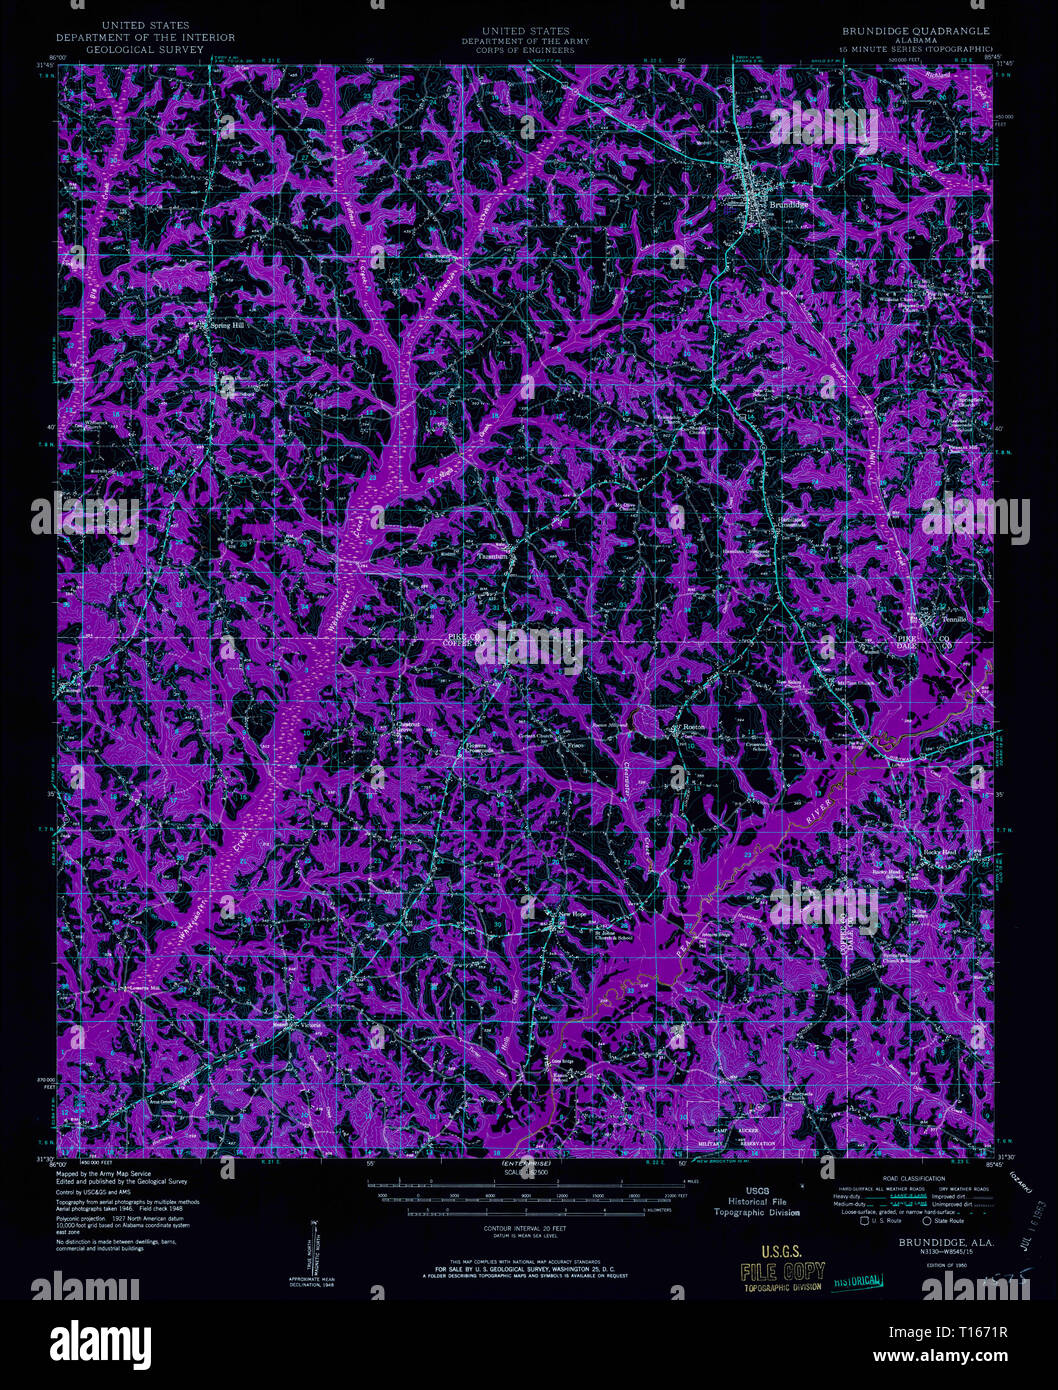 USGS TOPO Map Alabama AL Brundidge 305519 1950 62500 Inverted Stock Photo